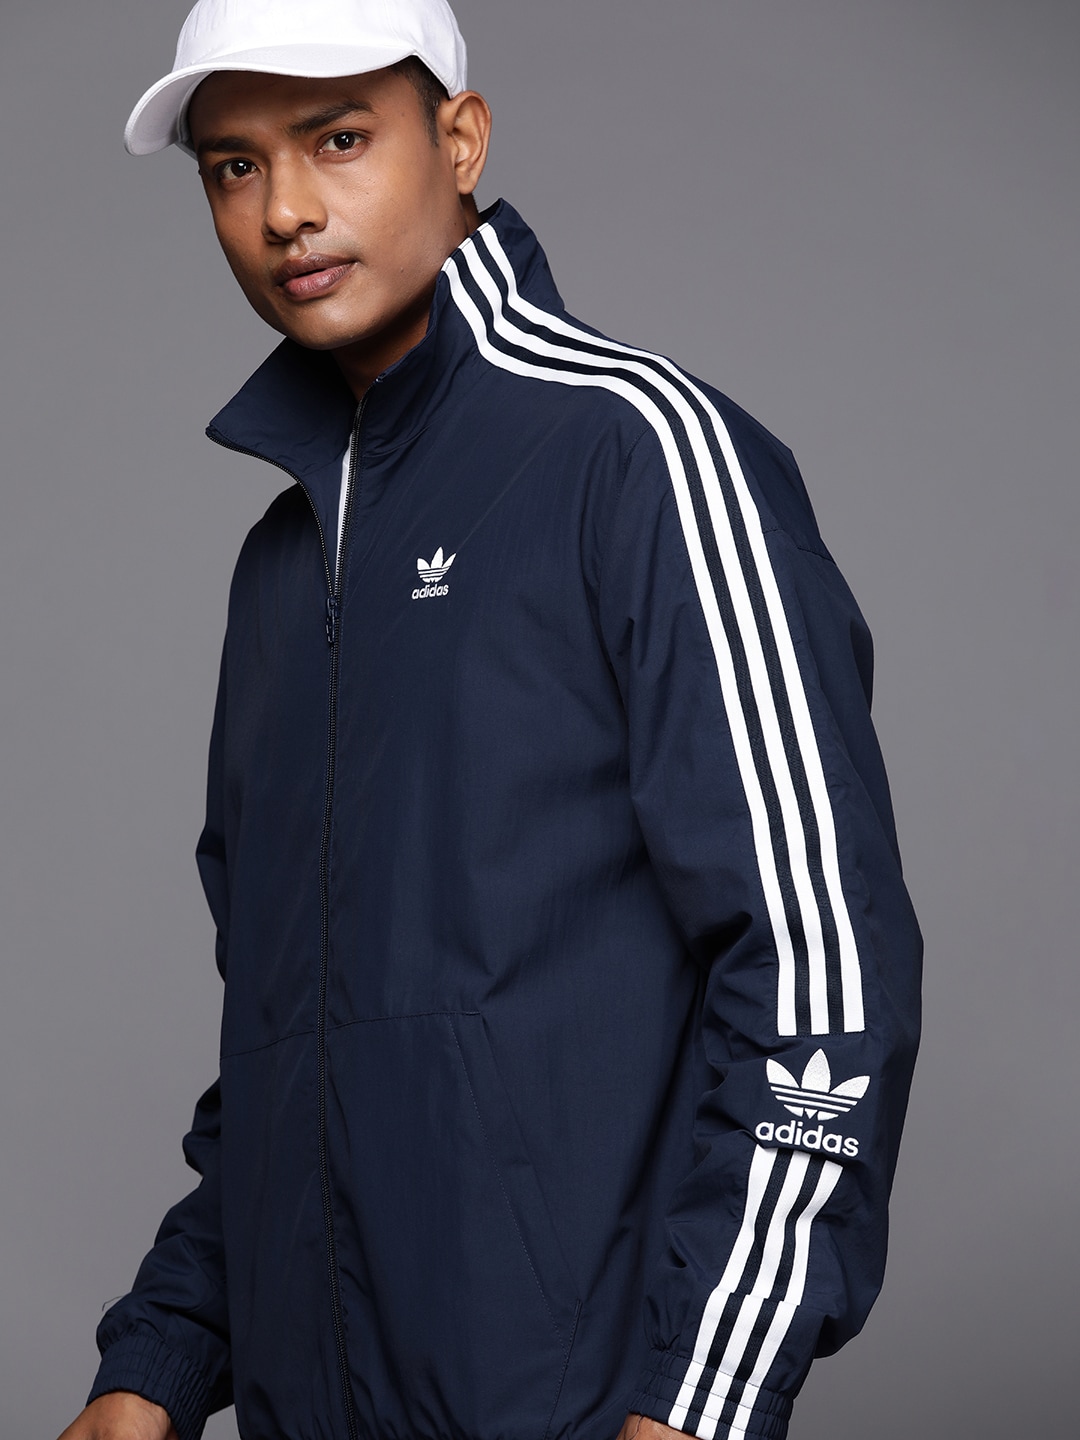 Buy Adidas Originals Jackets Online In India